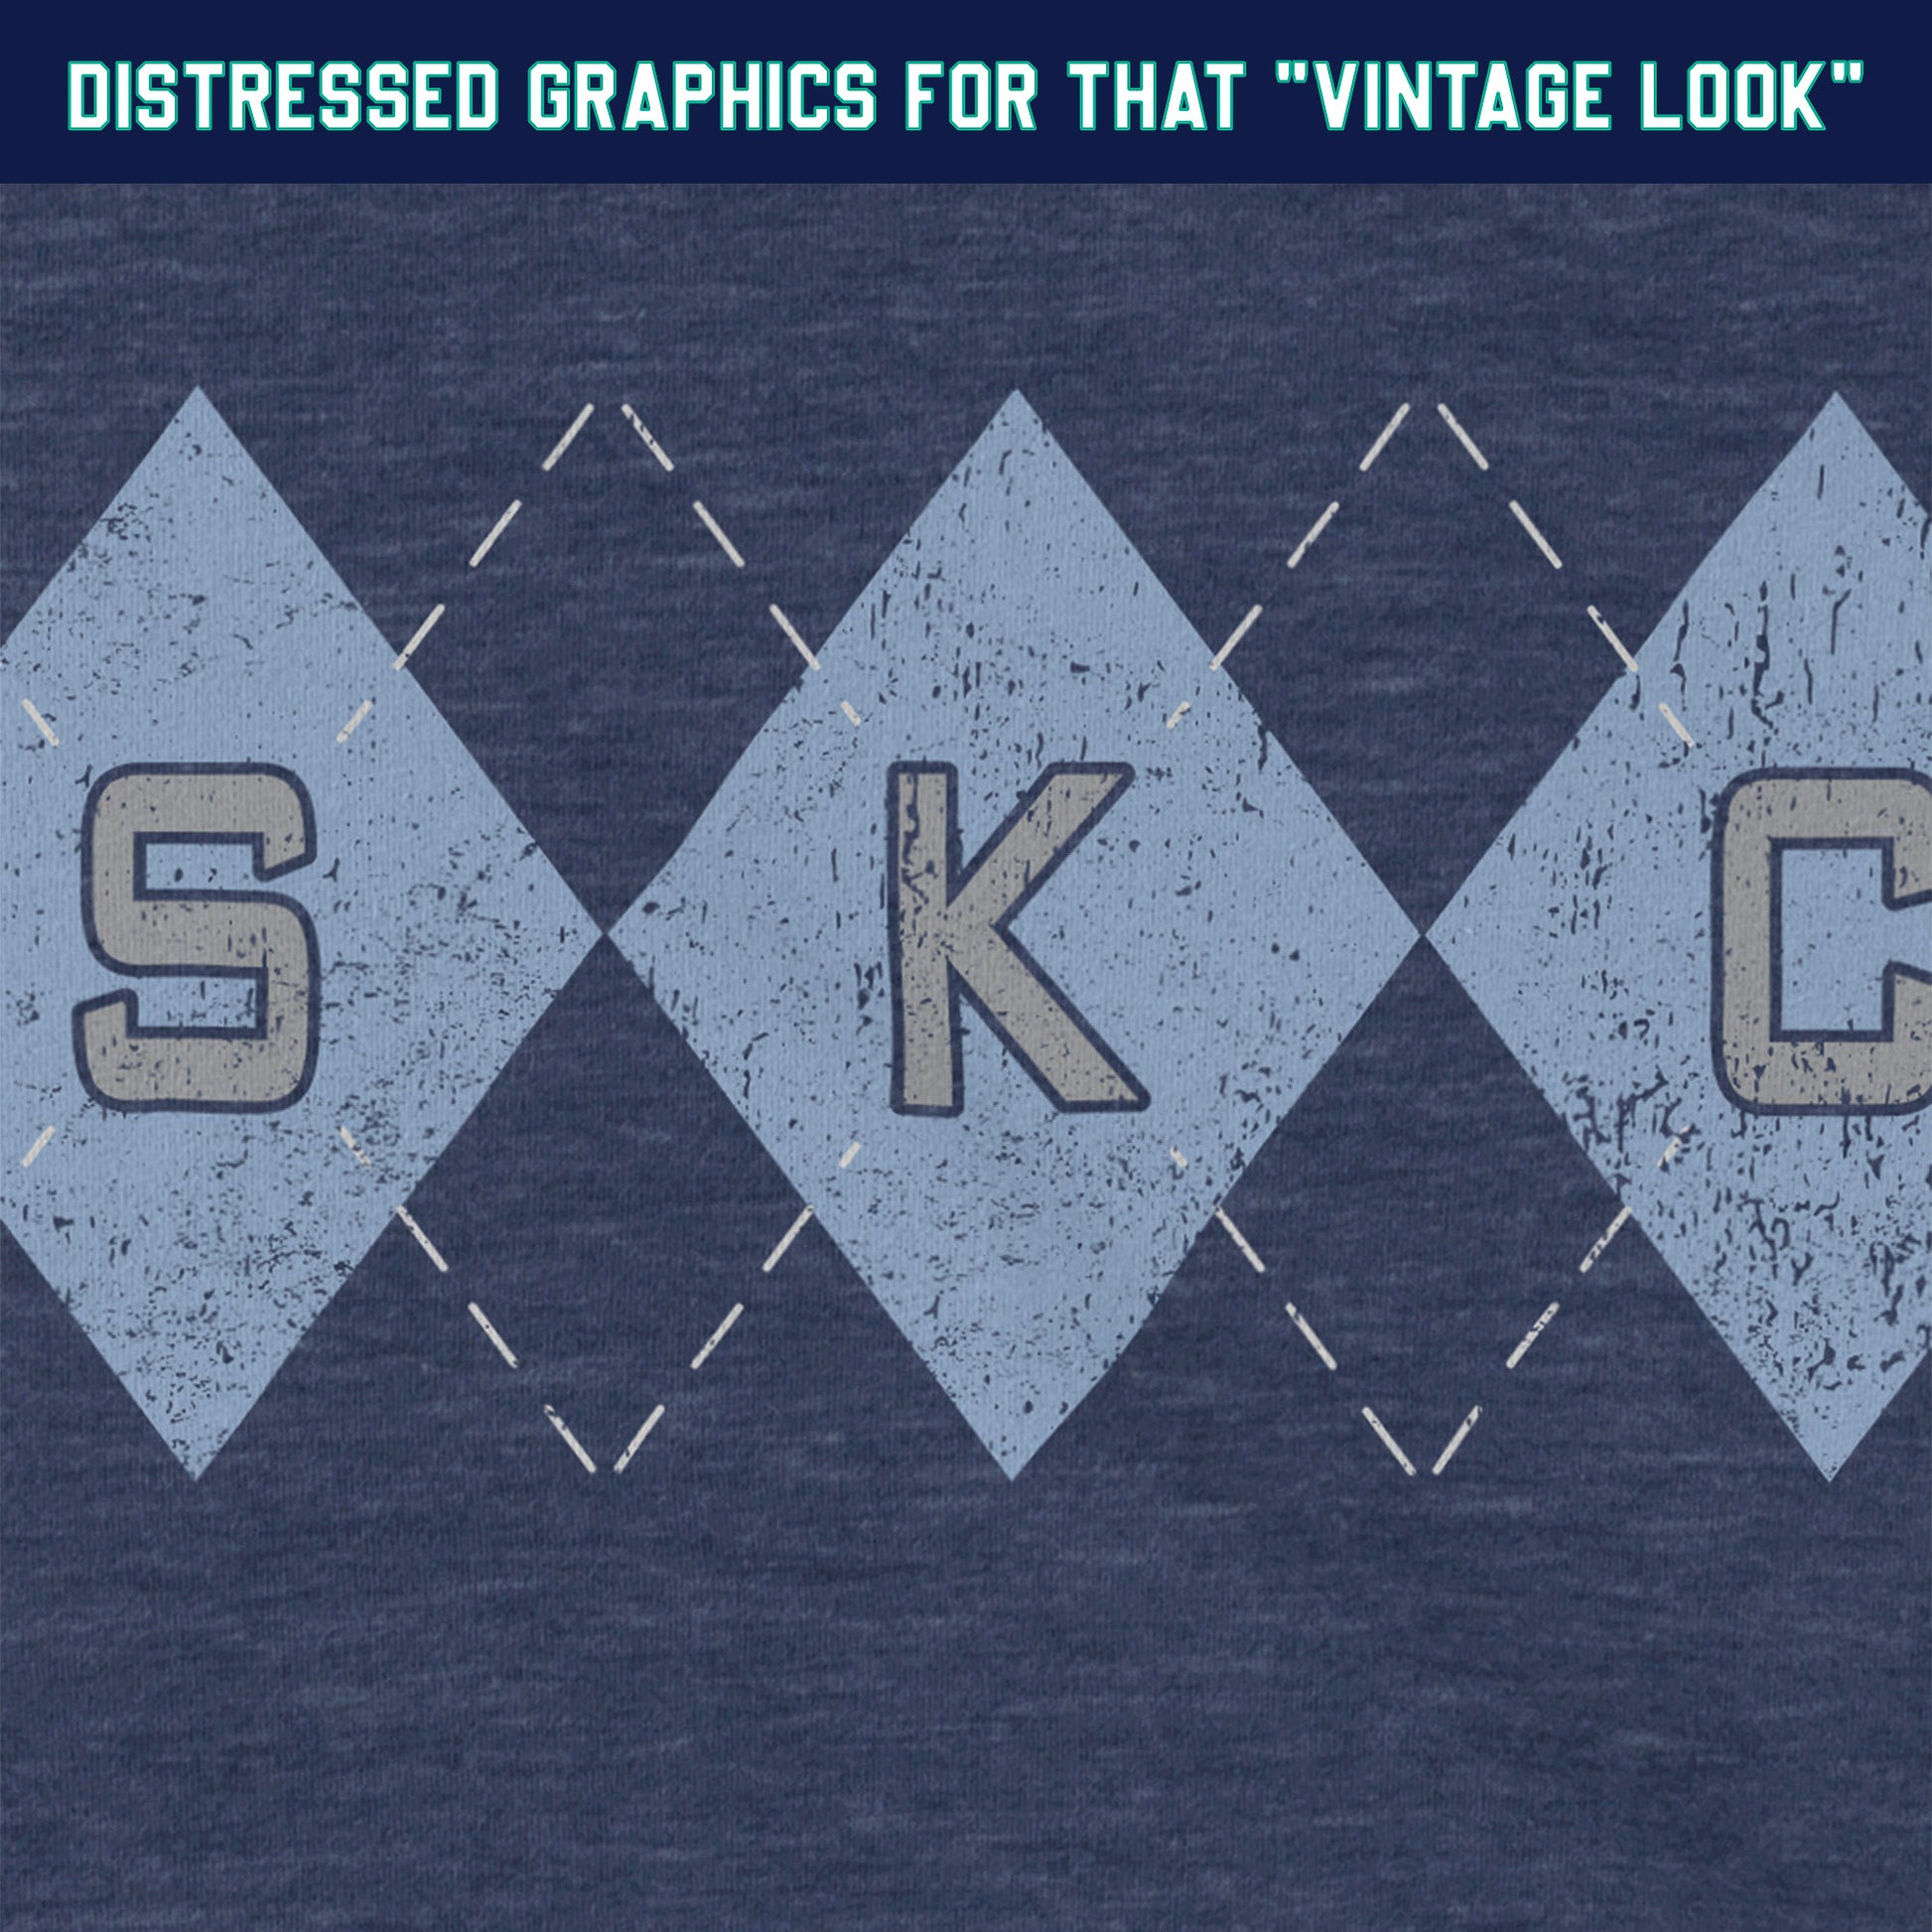 KC Swag Sporting Kansas City powder blue/navy/grey SKC DIAMONDS with argyle stitching on heather navy t-shirt closeup details of distressed graphics